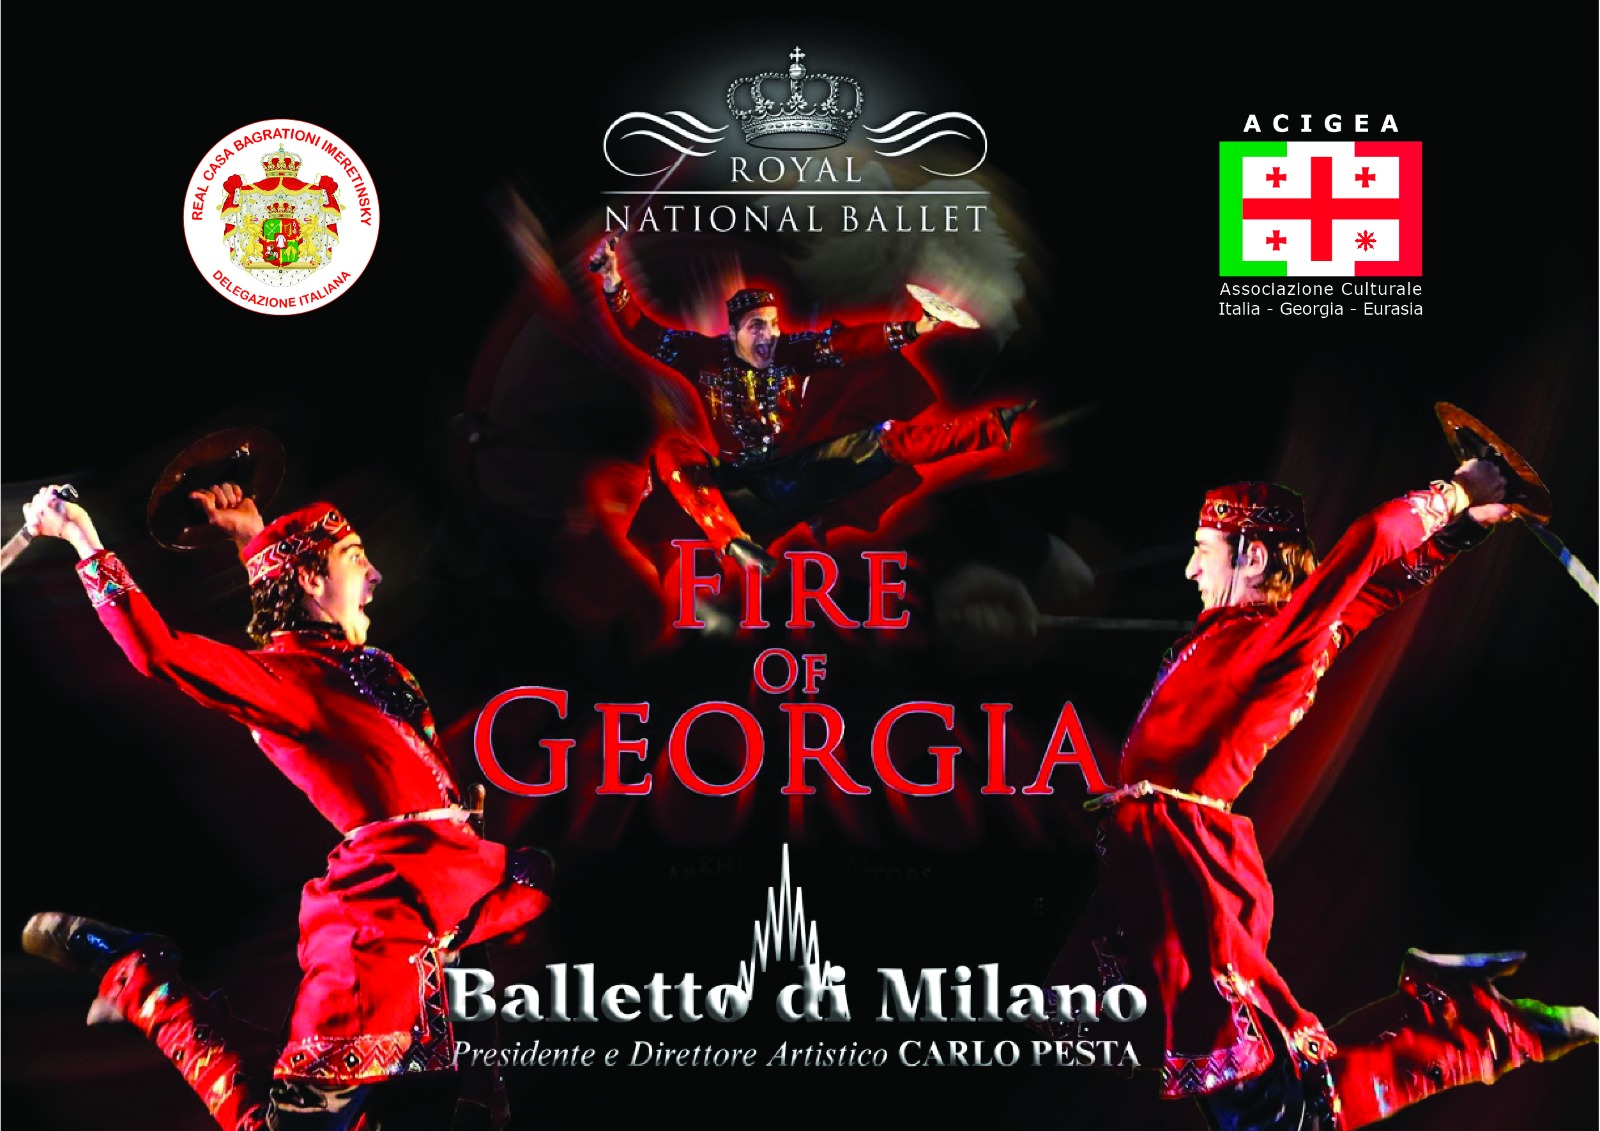 Royal National Ballet of Georgia